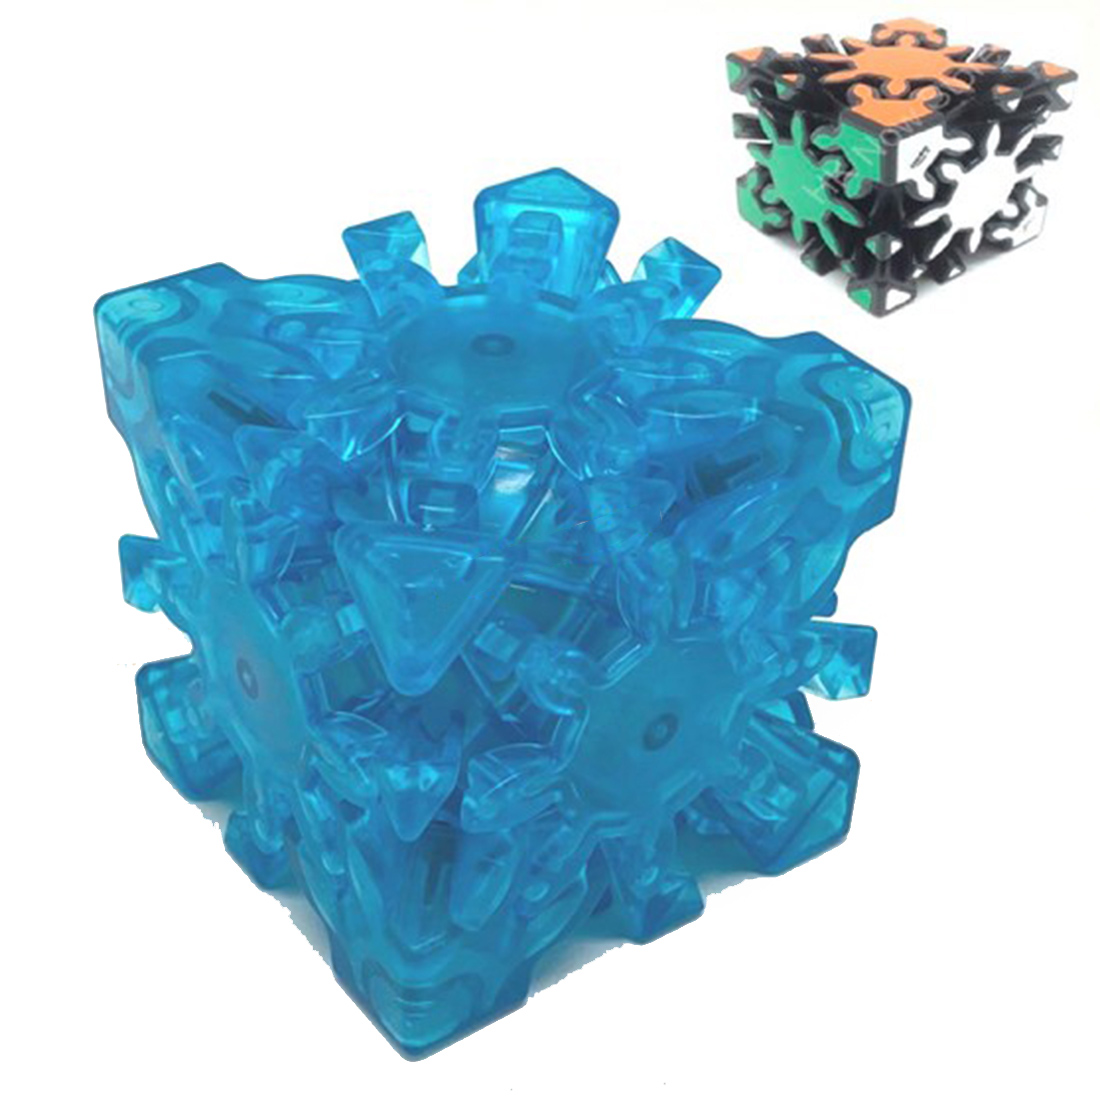 Calvin's Gear Magic Cube (Ice Blue/Limited Edition)